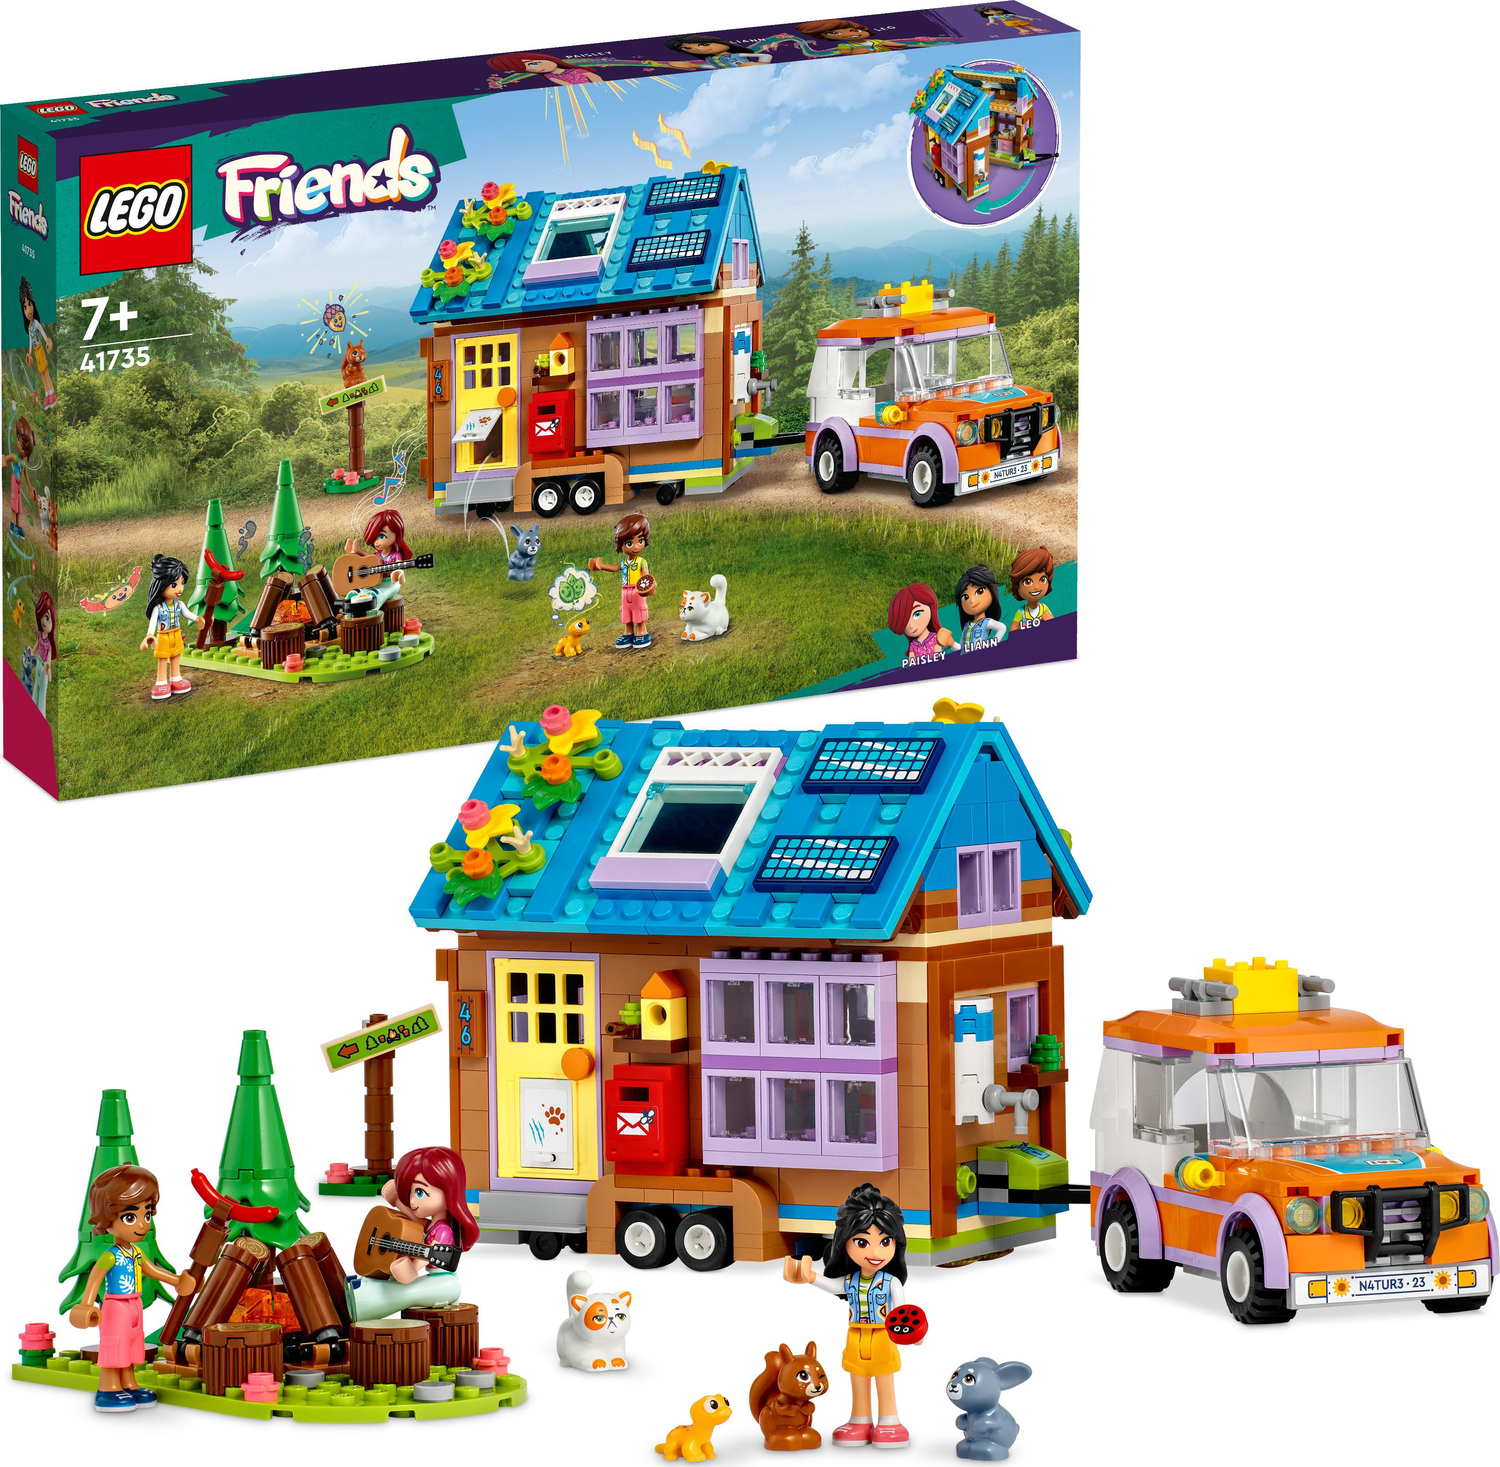 LEGO Friends - Friendship House - Imagine That Toys